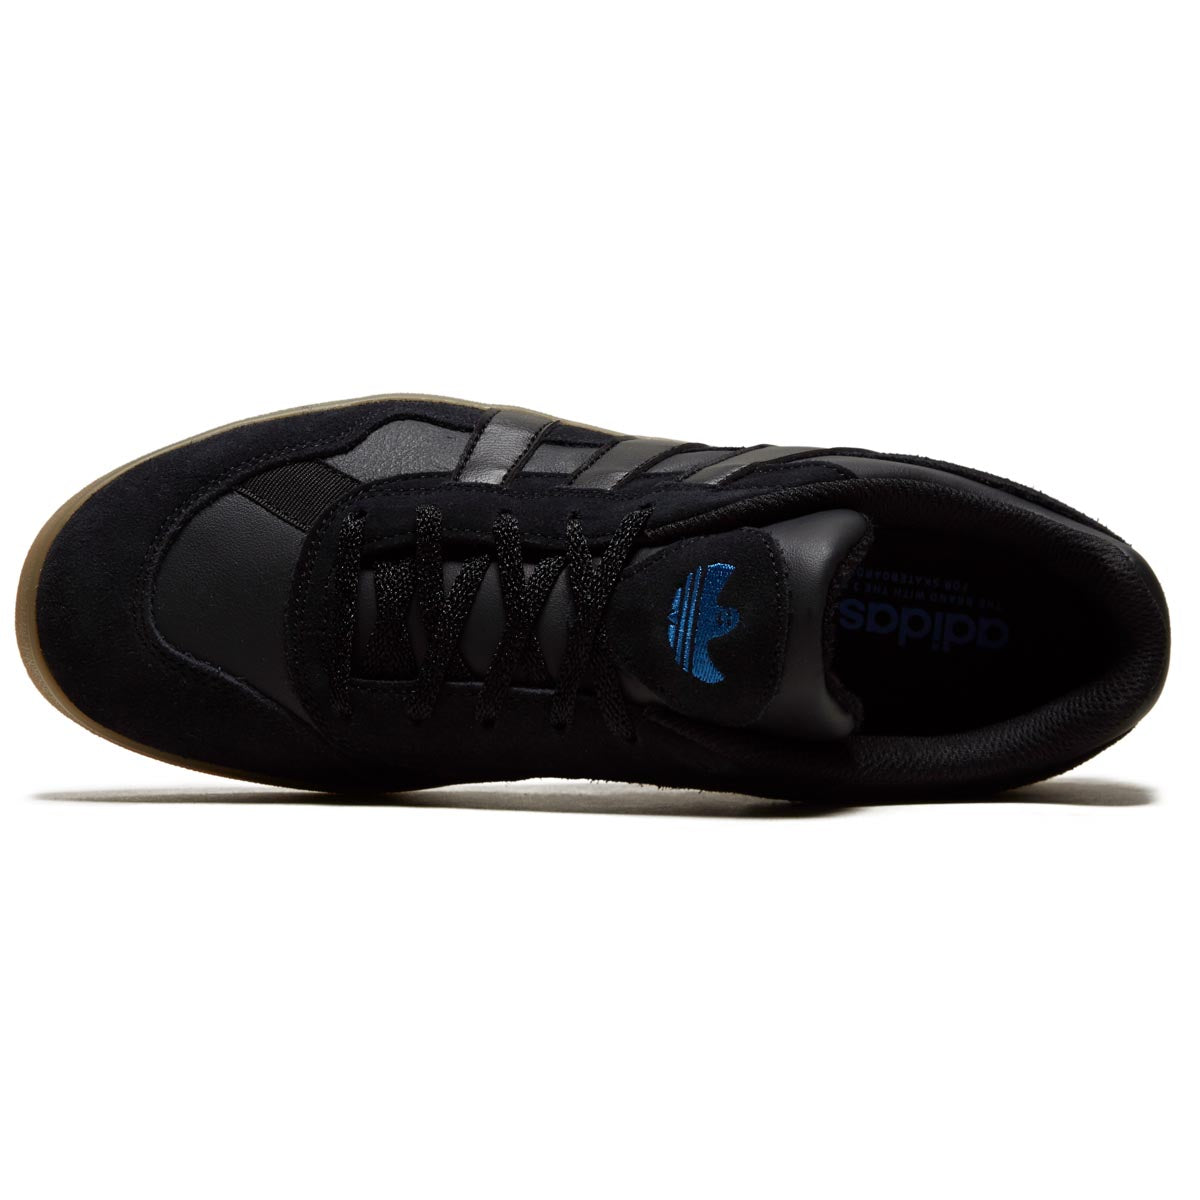 Adidas Aloha Super Shoes - Core Black/Carbon/Bluebird image 3